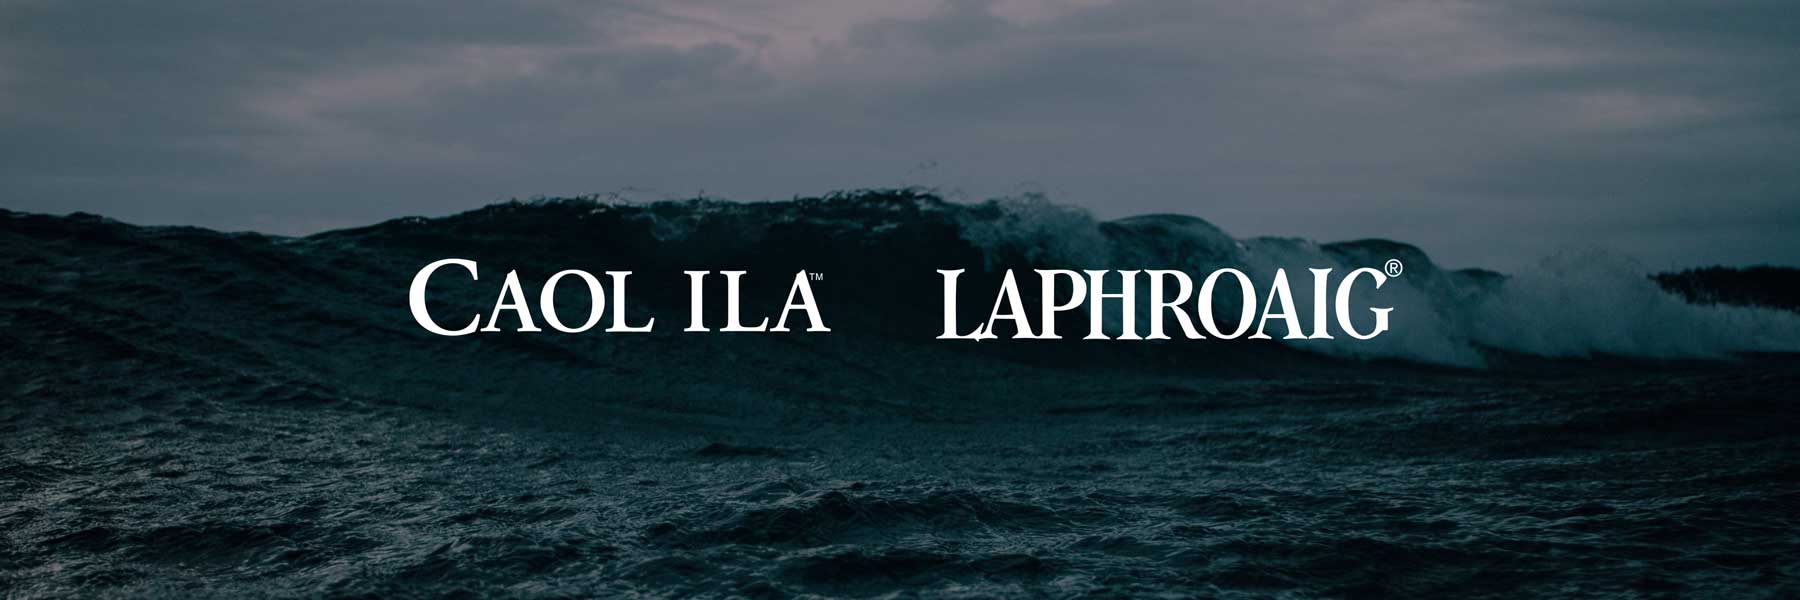 Caol Ila vs Laphroaig | Which one is better?